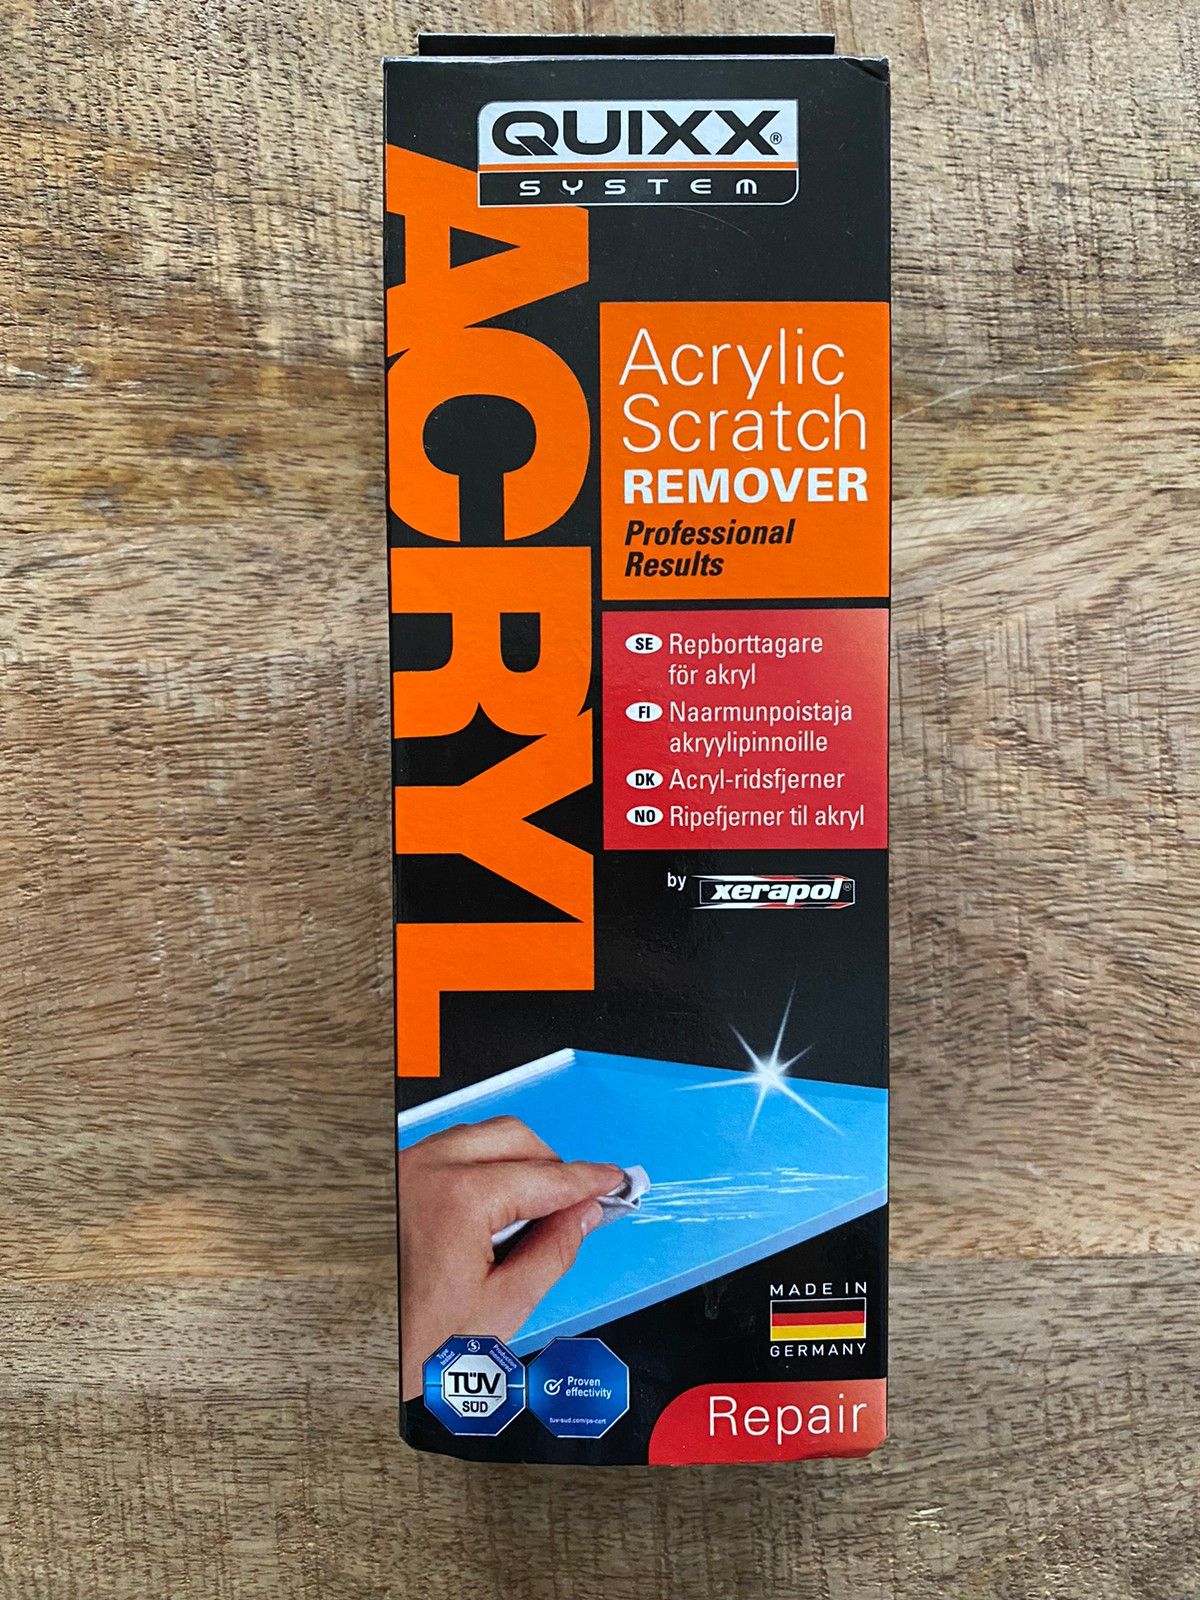 Quixx Acrylic scratch remover